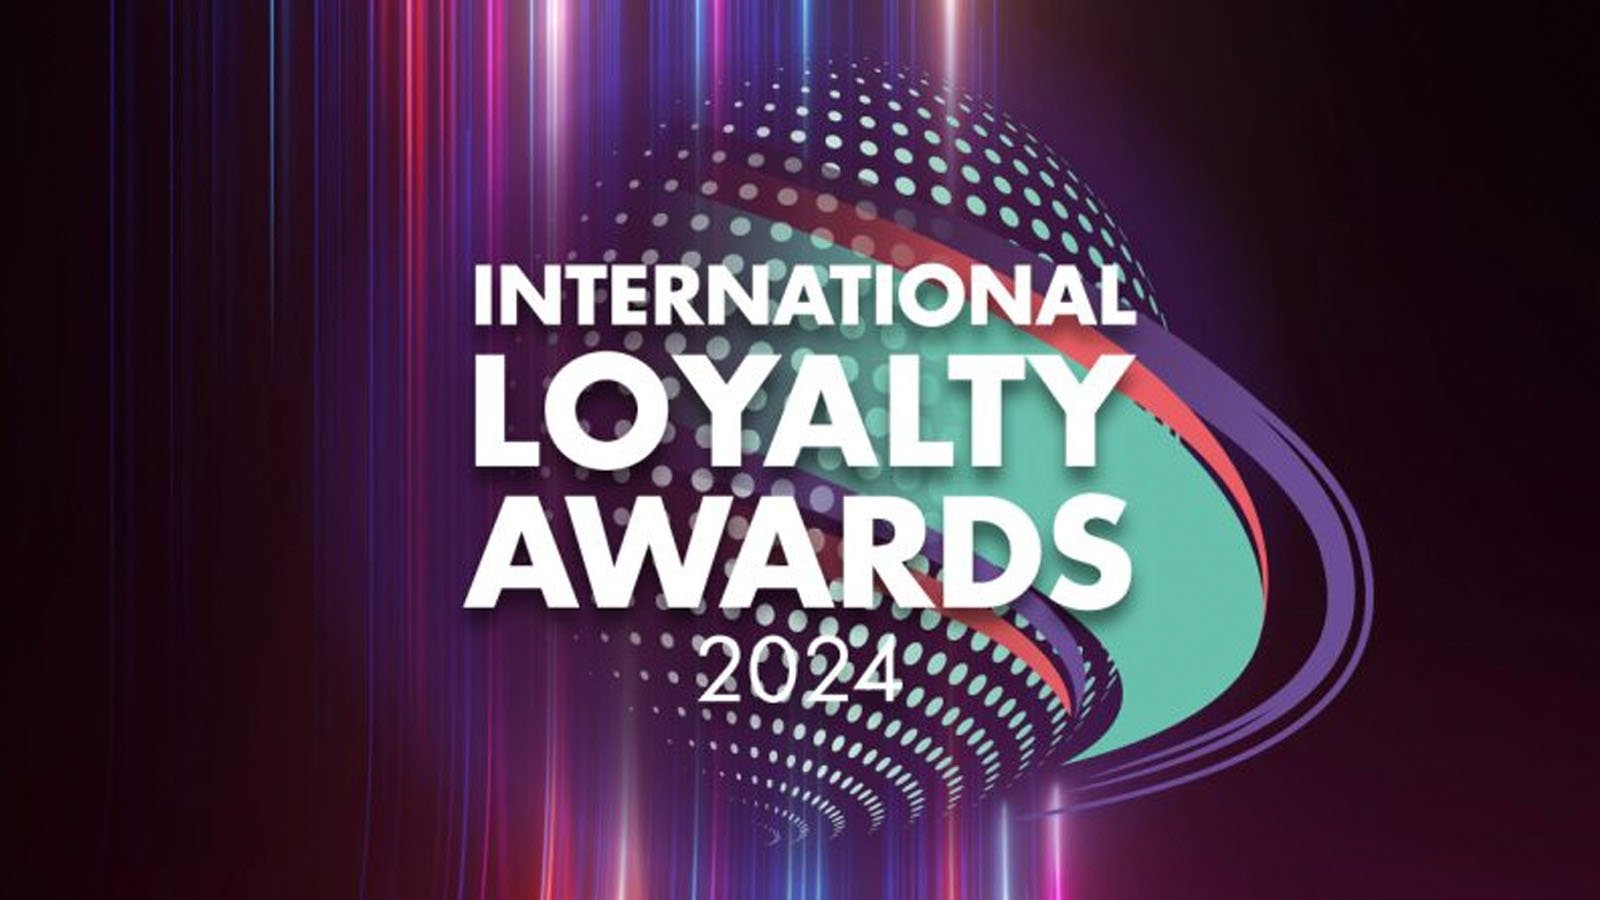 International Loyalty Awards 2024